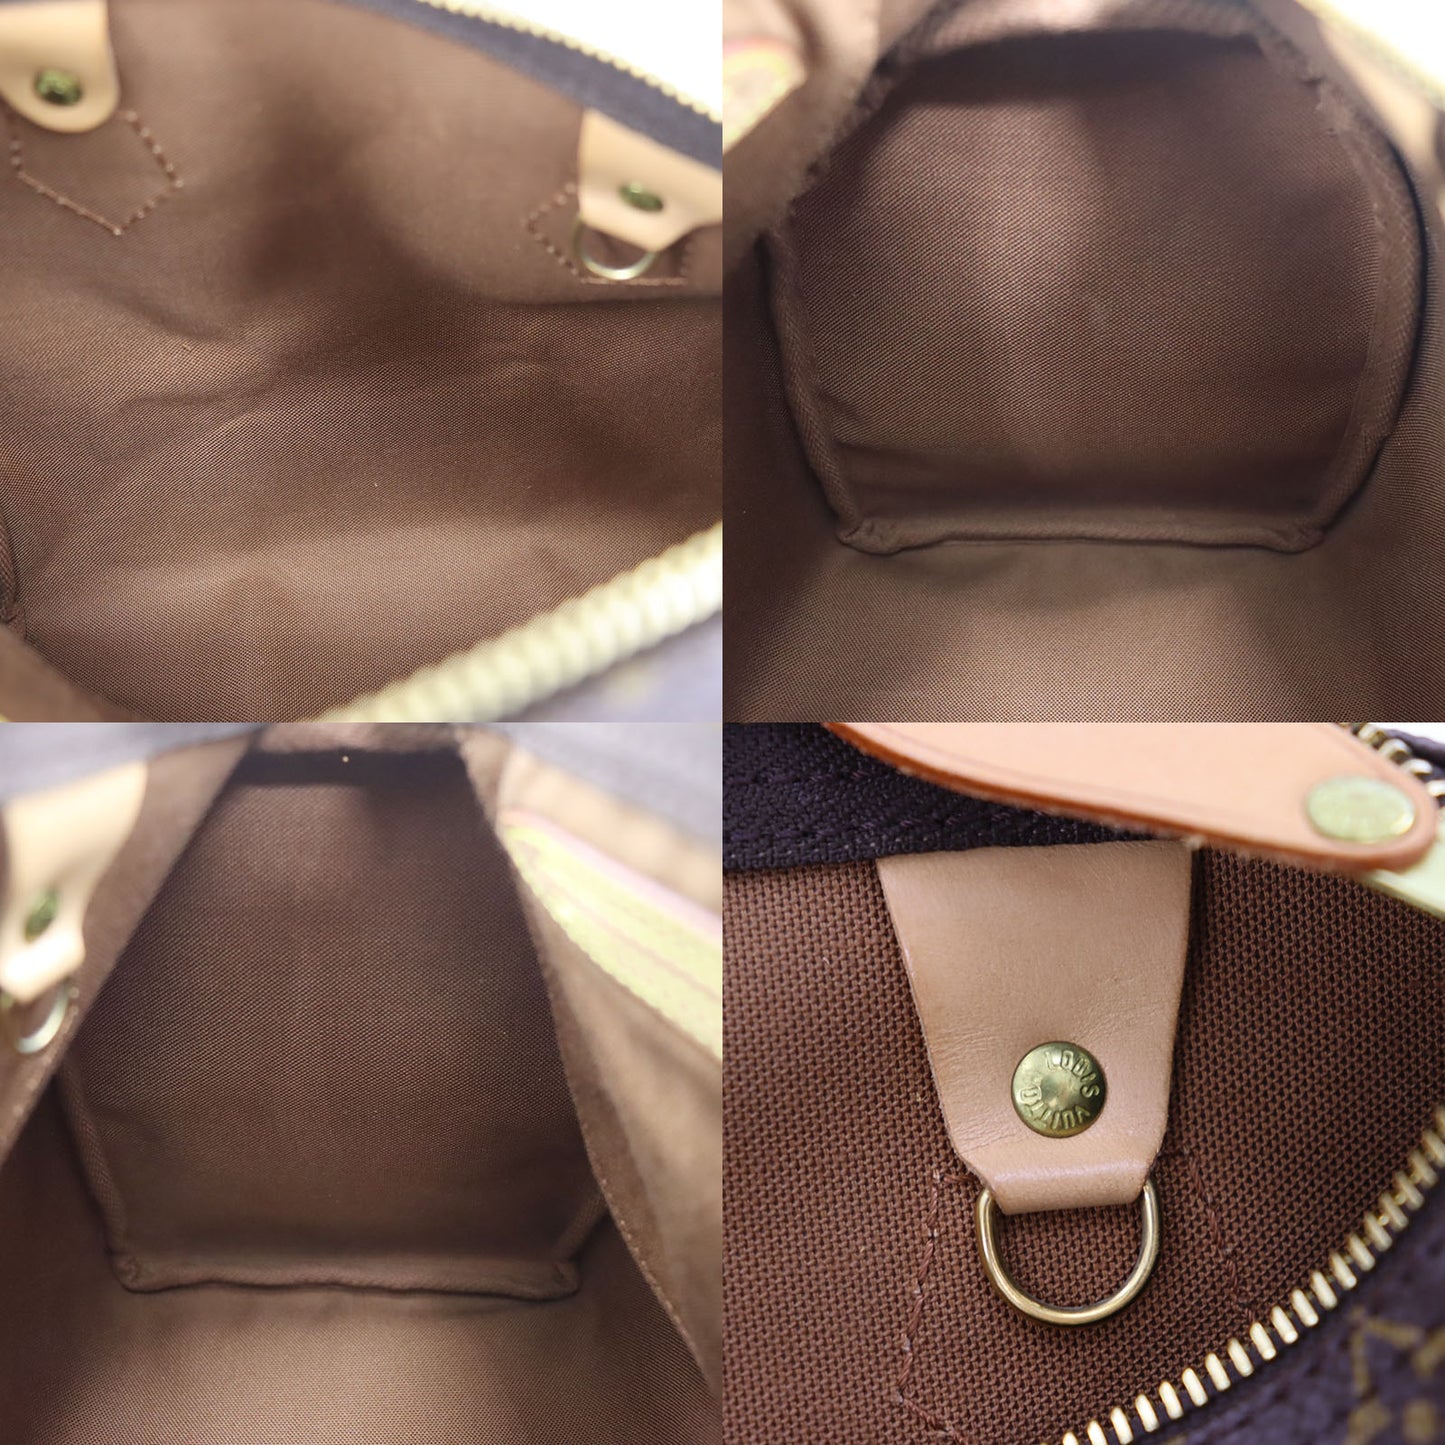 Louis Vuitton LV Speedy 25 Handbag Monogram Leather M41109 #BZ260